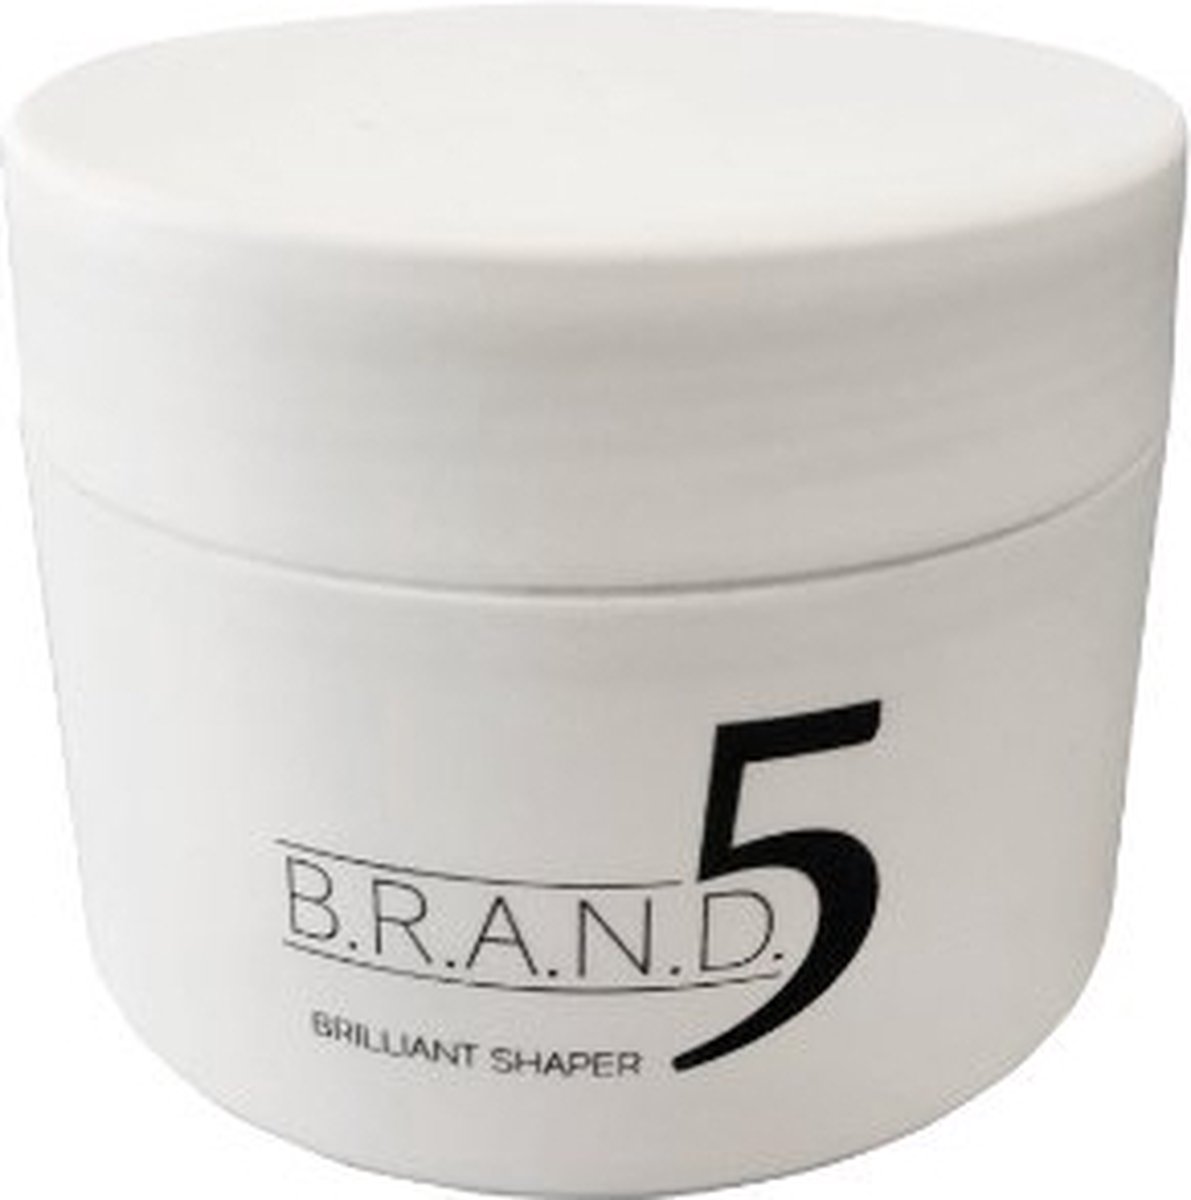 Brand 5 Brilliant Shaper 100ML